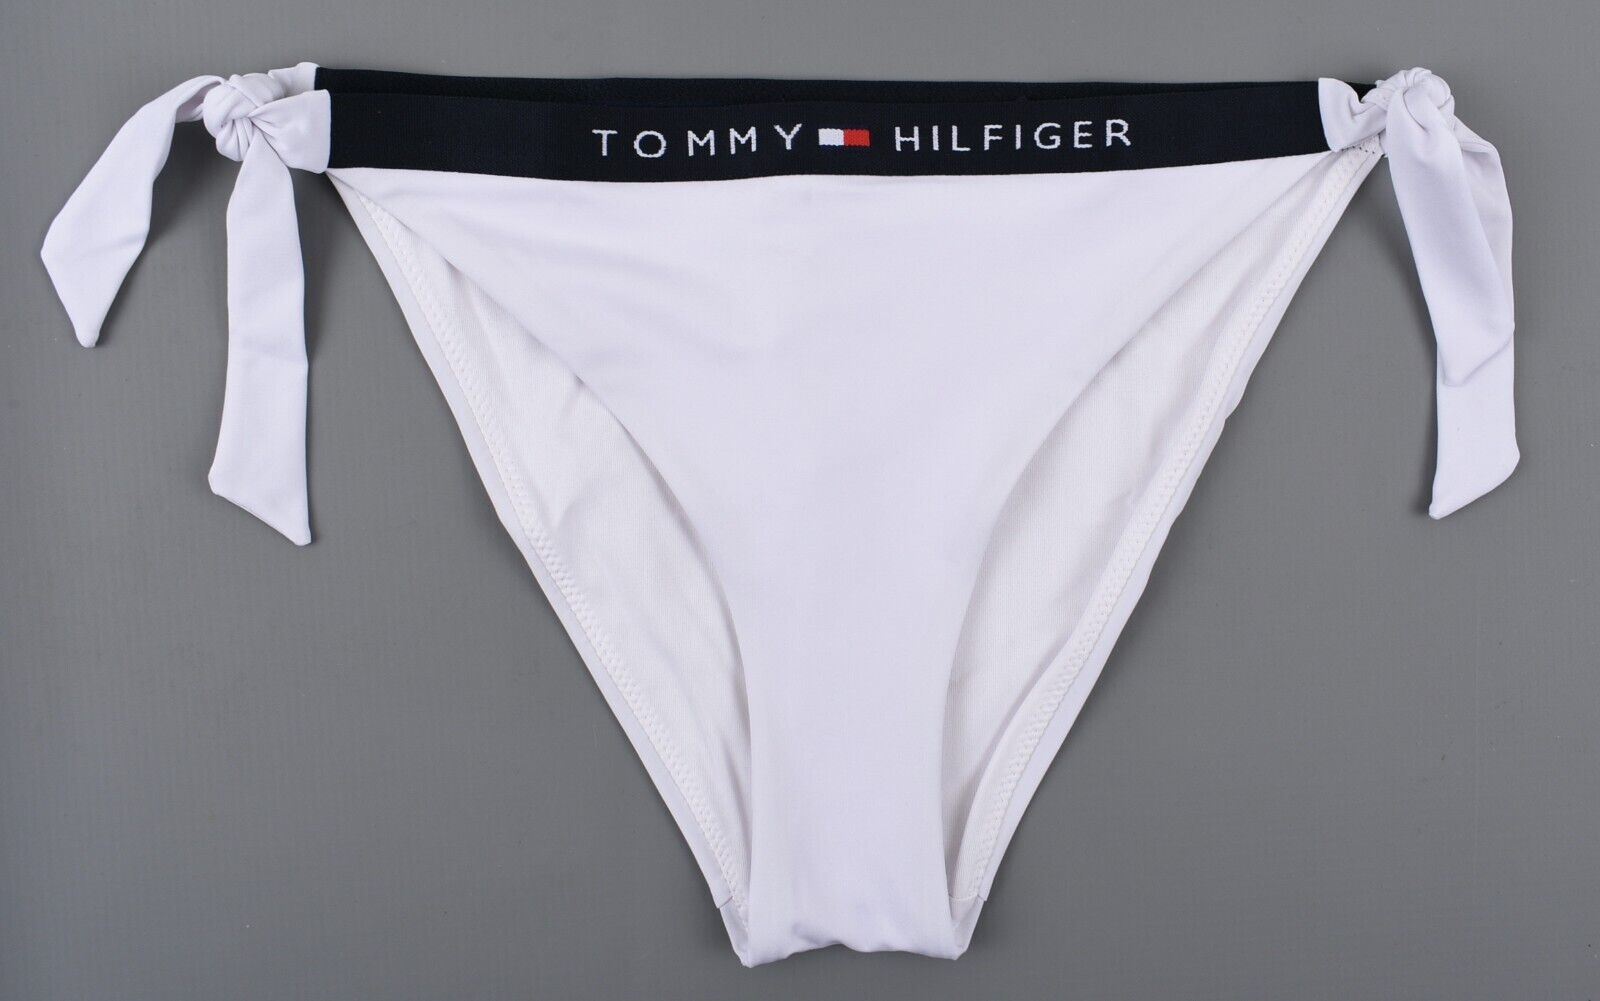 TOMMY HILFIGER Swimwear: Women's Side Tie Cheeky Bikini, White, size M (UK 12)